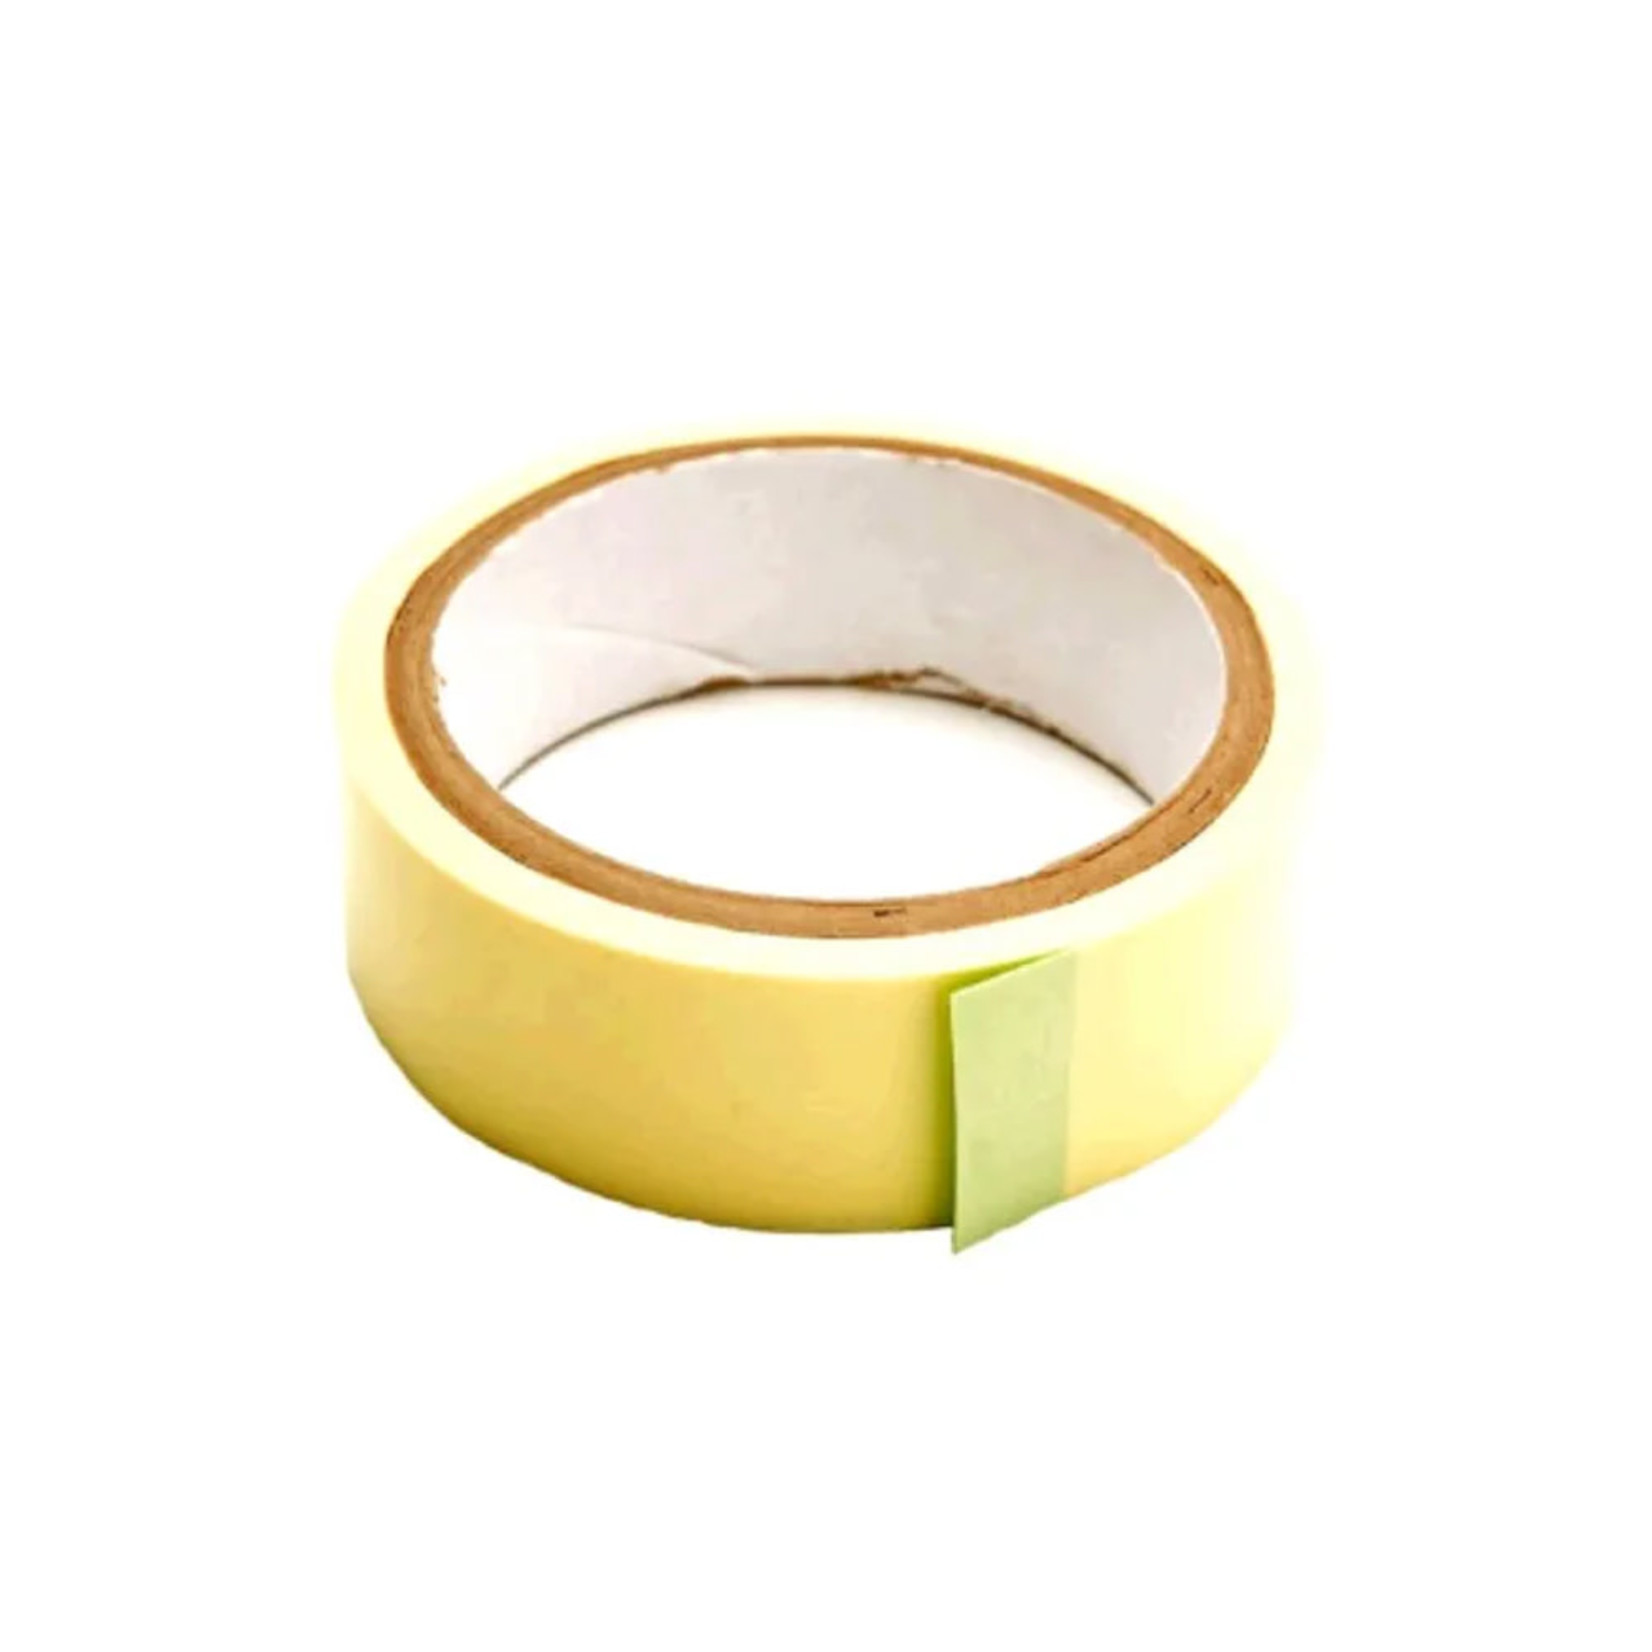 Bikelane BPW Rim Tape for Tubeless Rims - Width 21mm X 0.12mm x Length 10m - Yellow